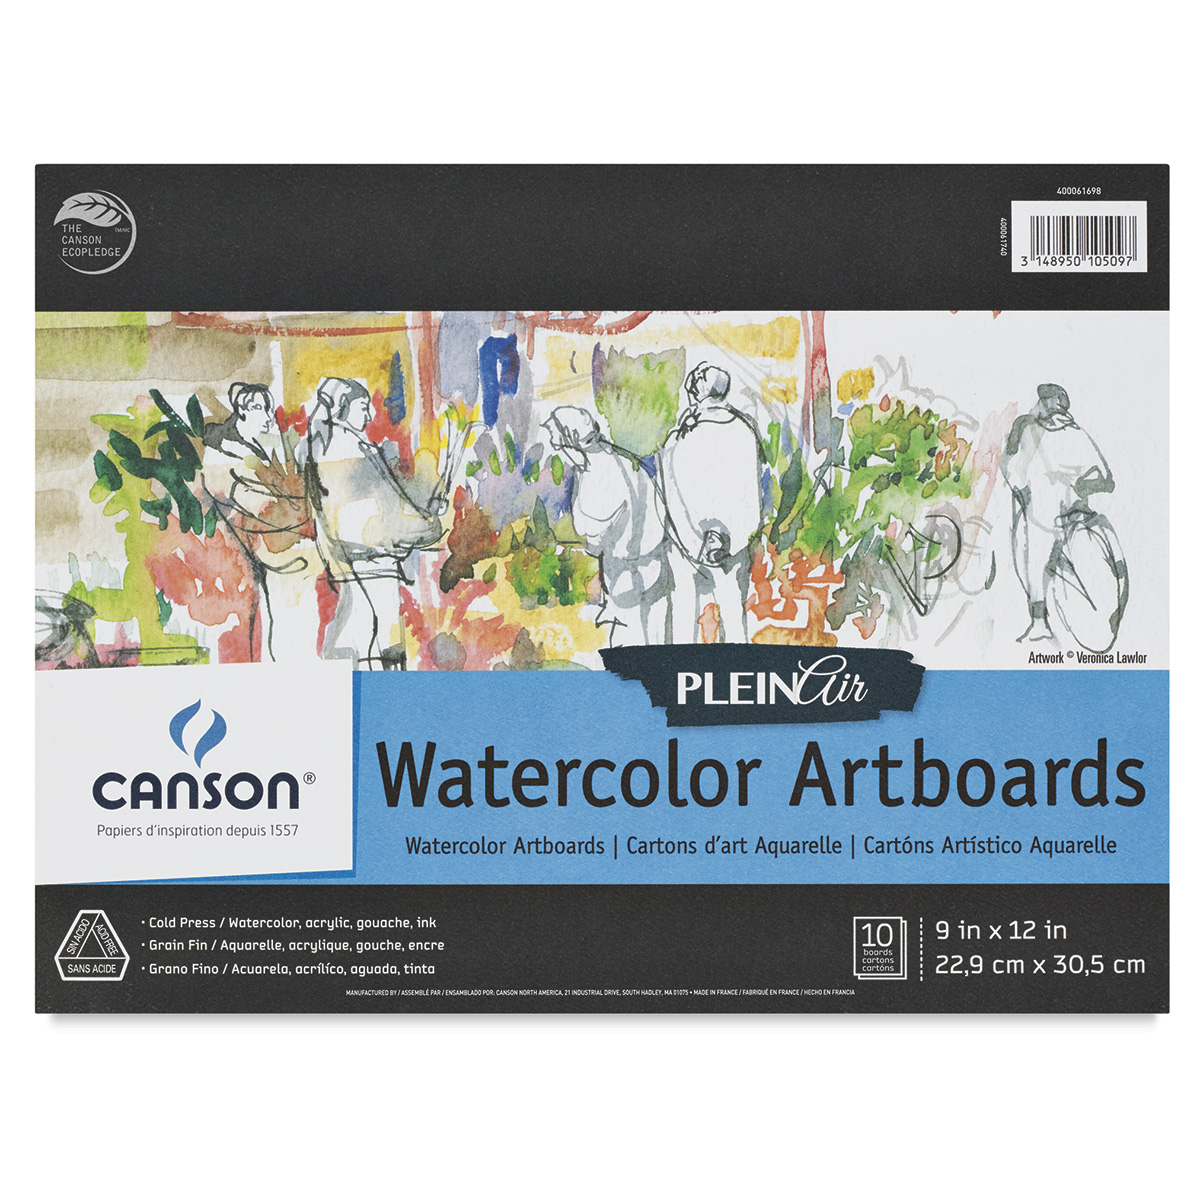 Canson Plein Air Watercolor Artboard | Blick Art Materials